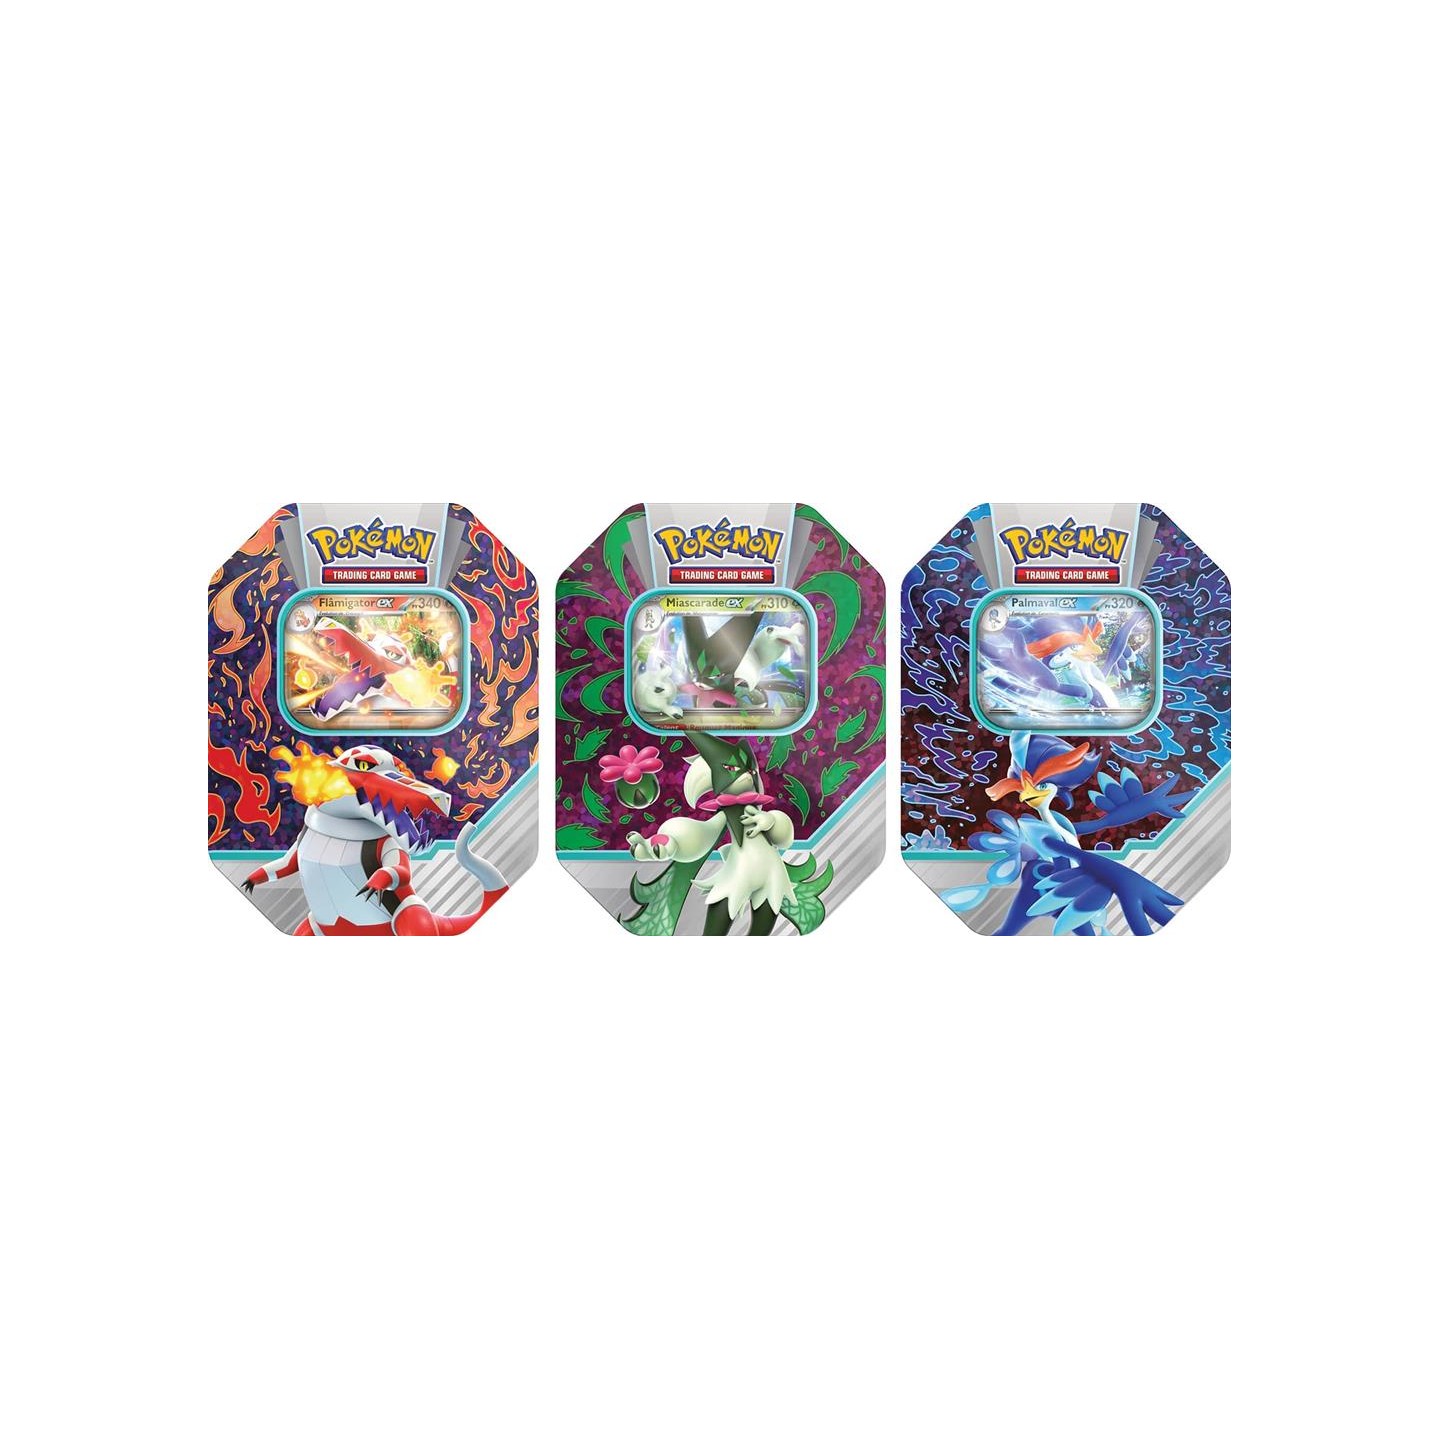 Acheter Pokémon - Pokébox Palmaval, jeu de cartes, Annecy